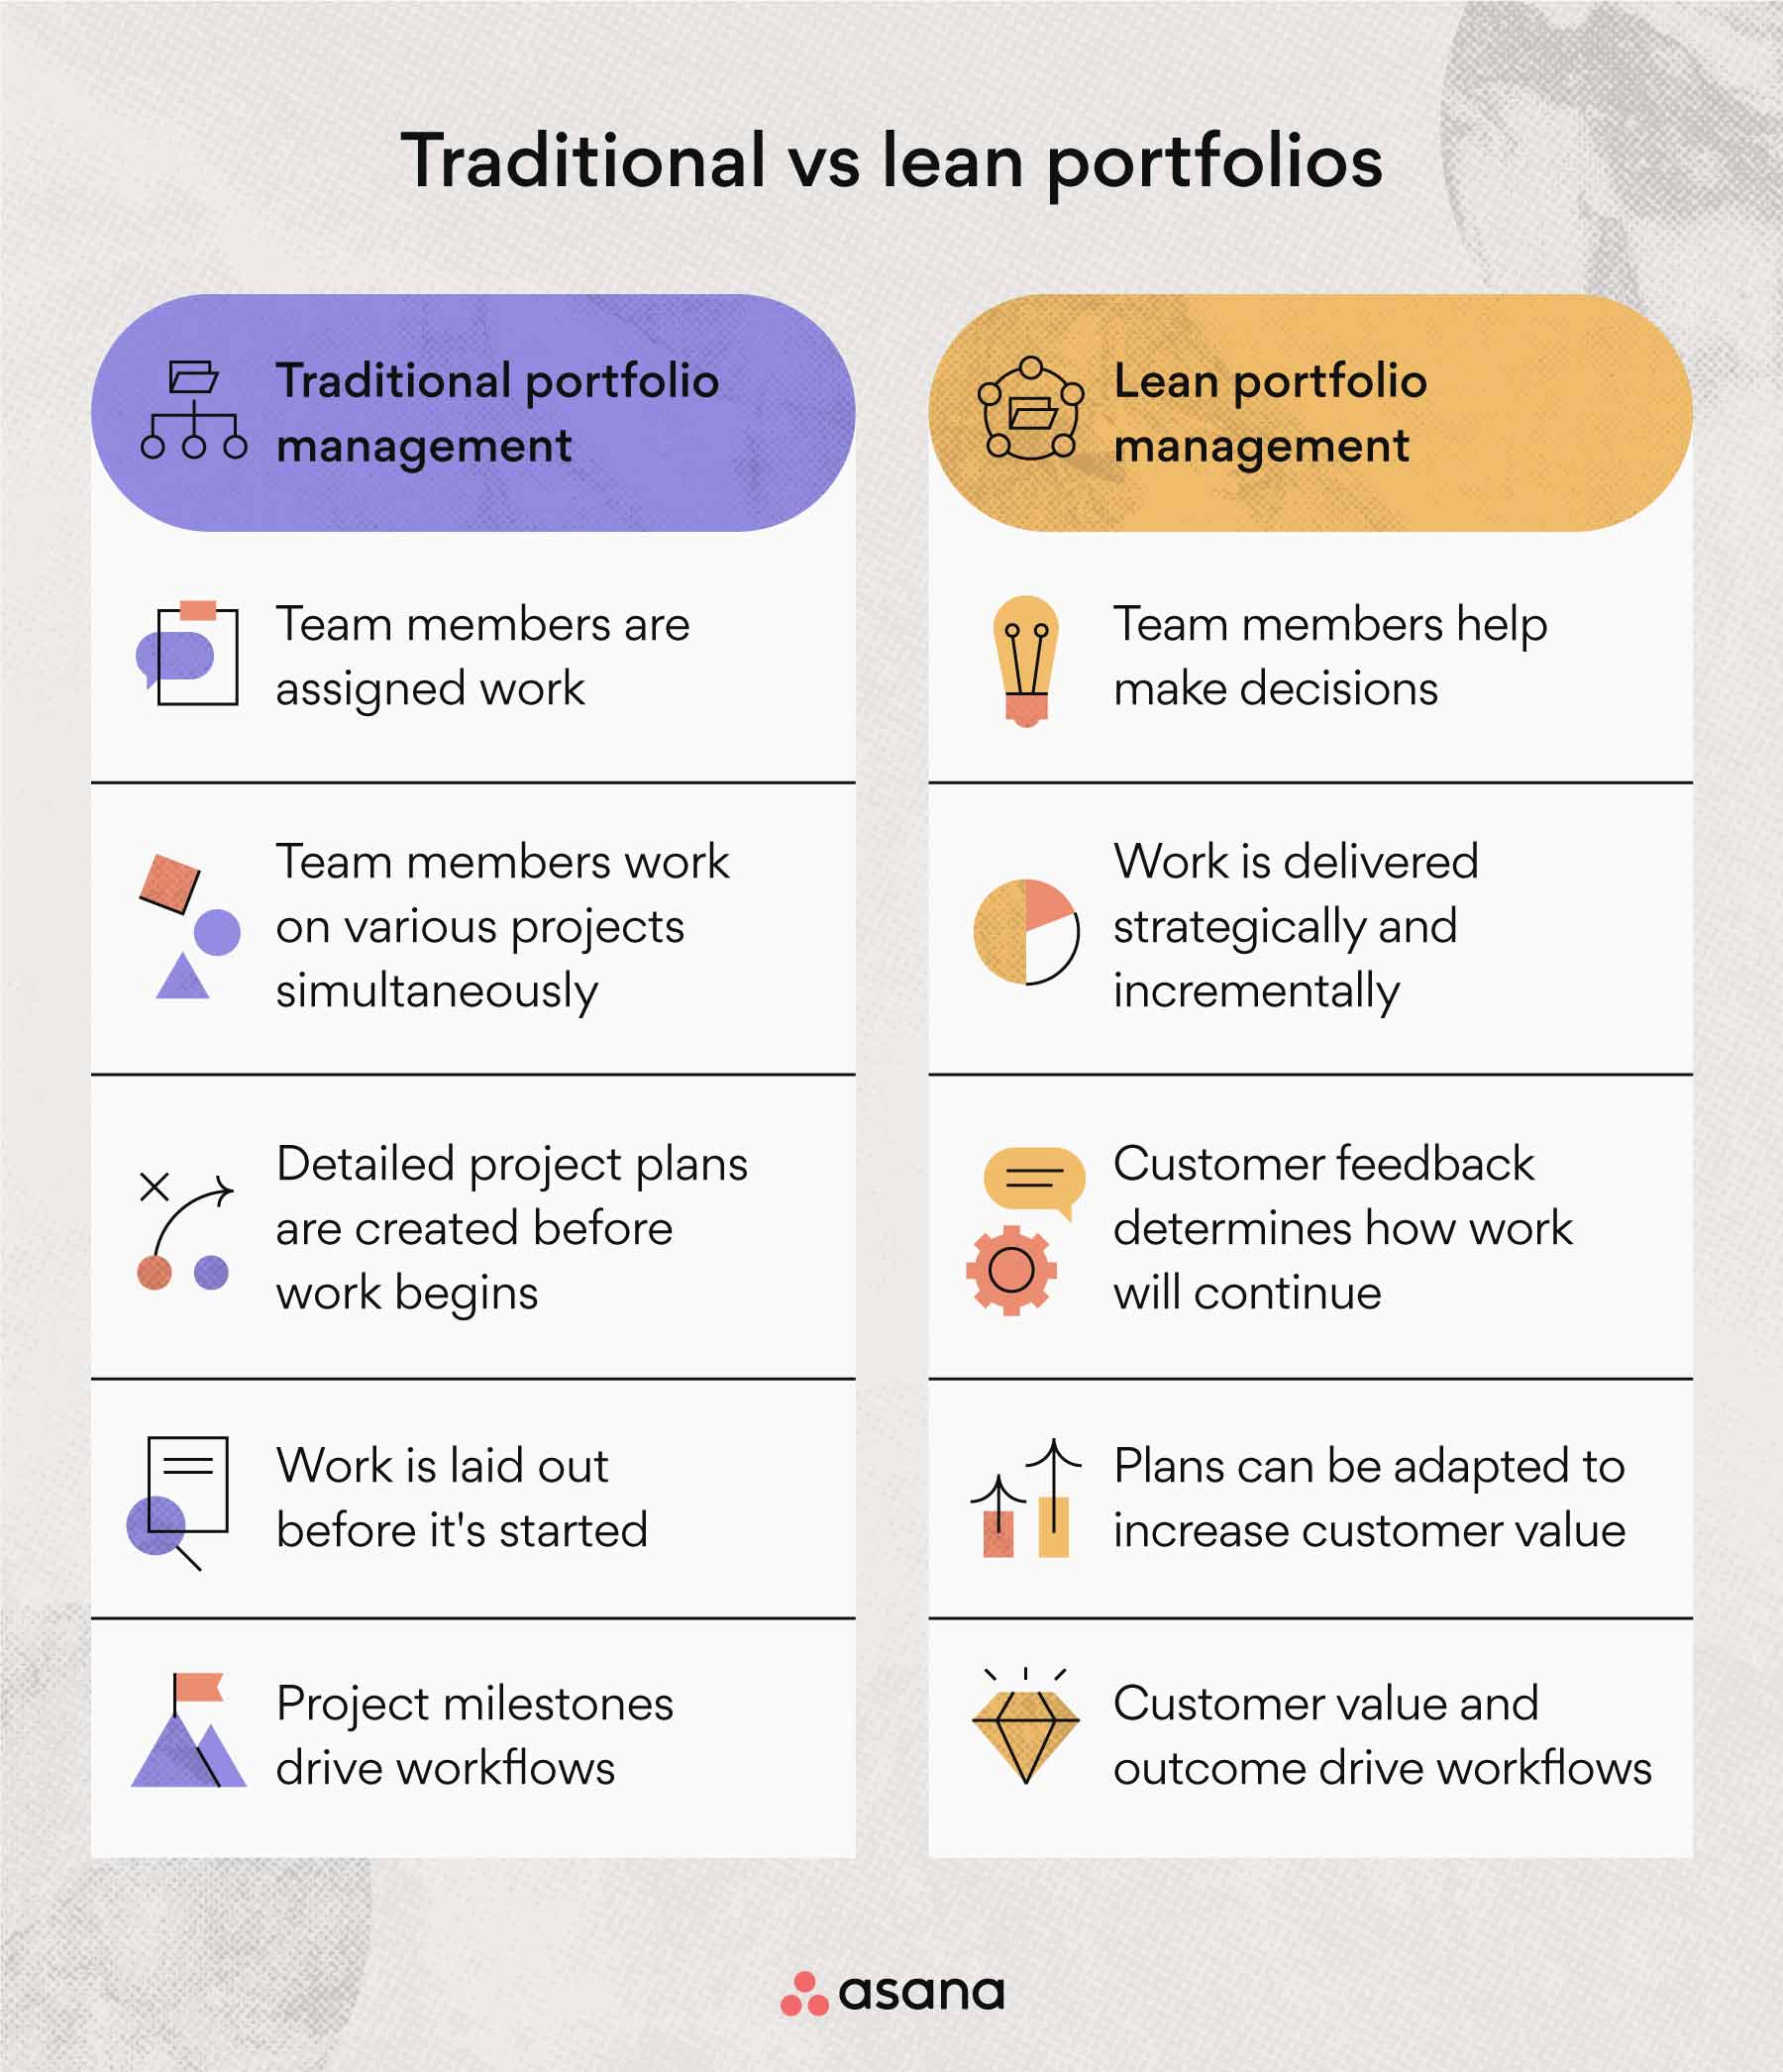 Traditional vs. lean portfolios